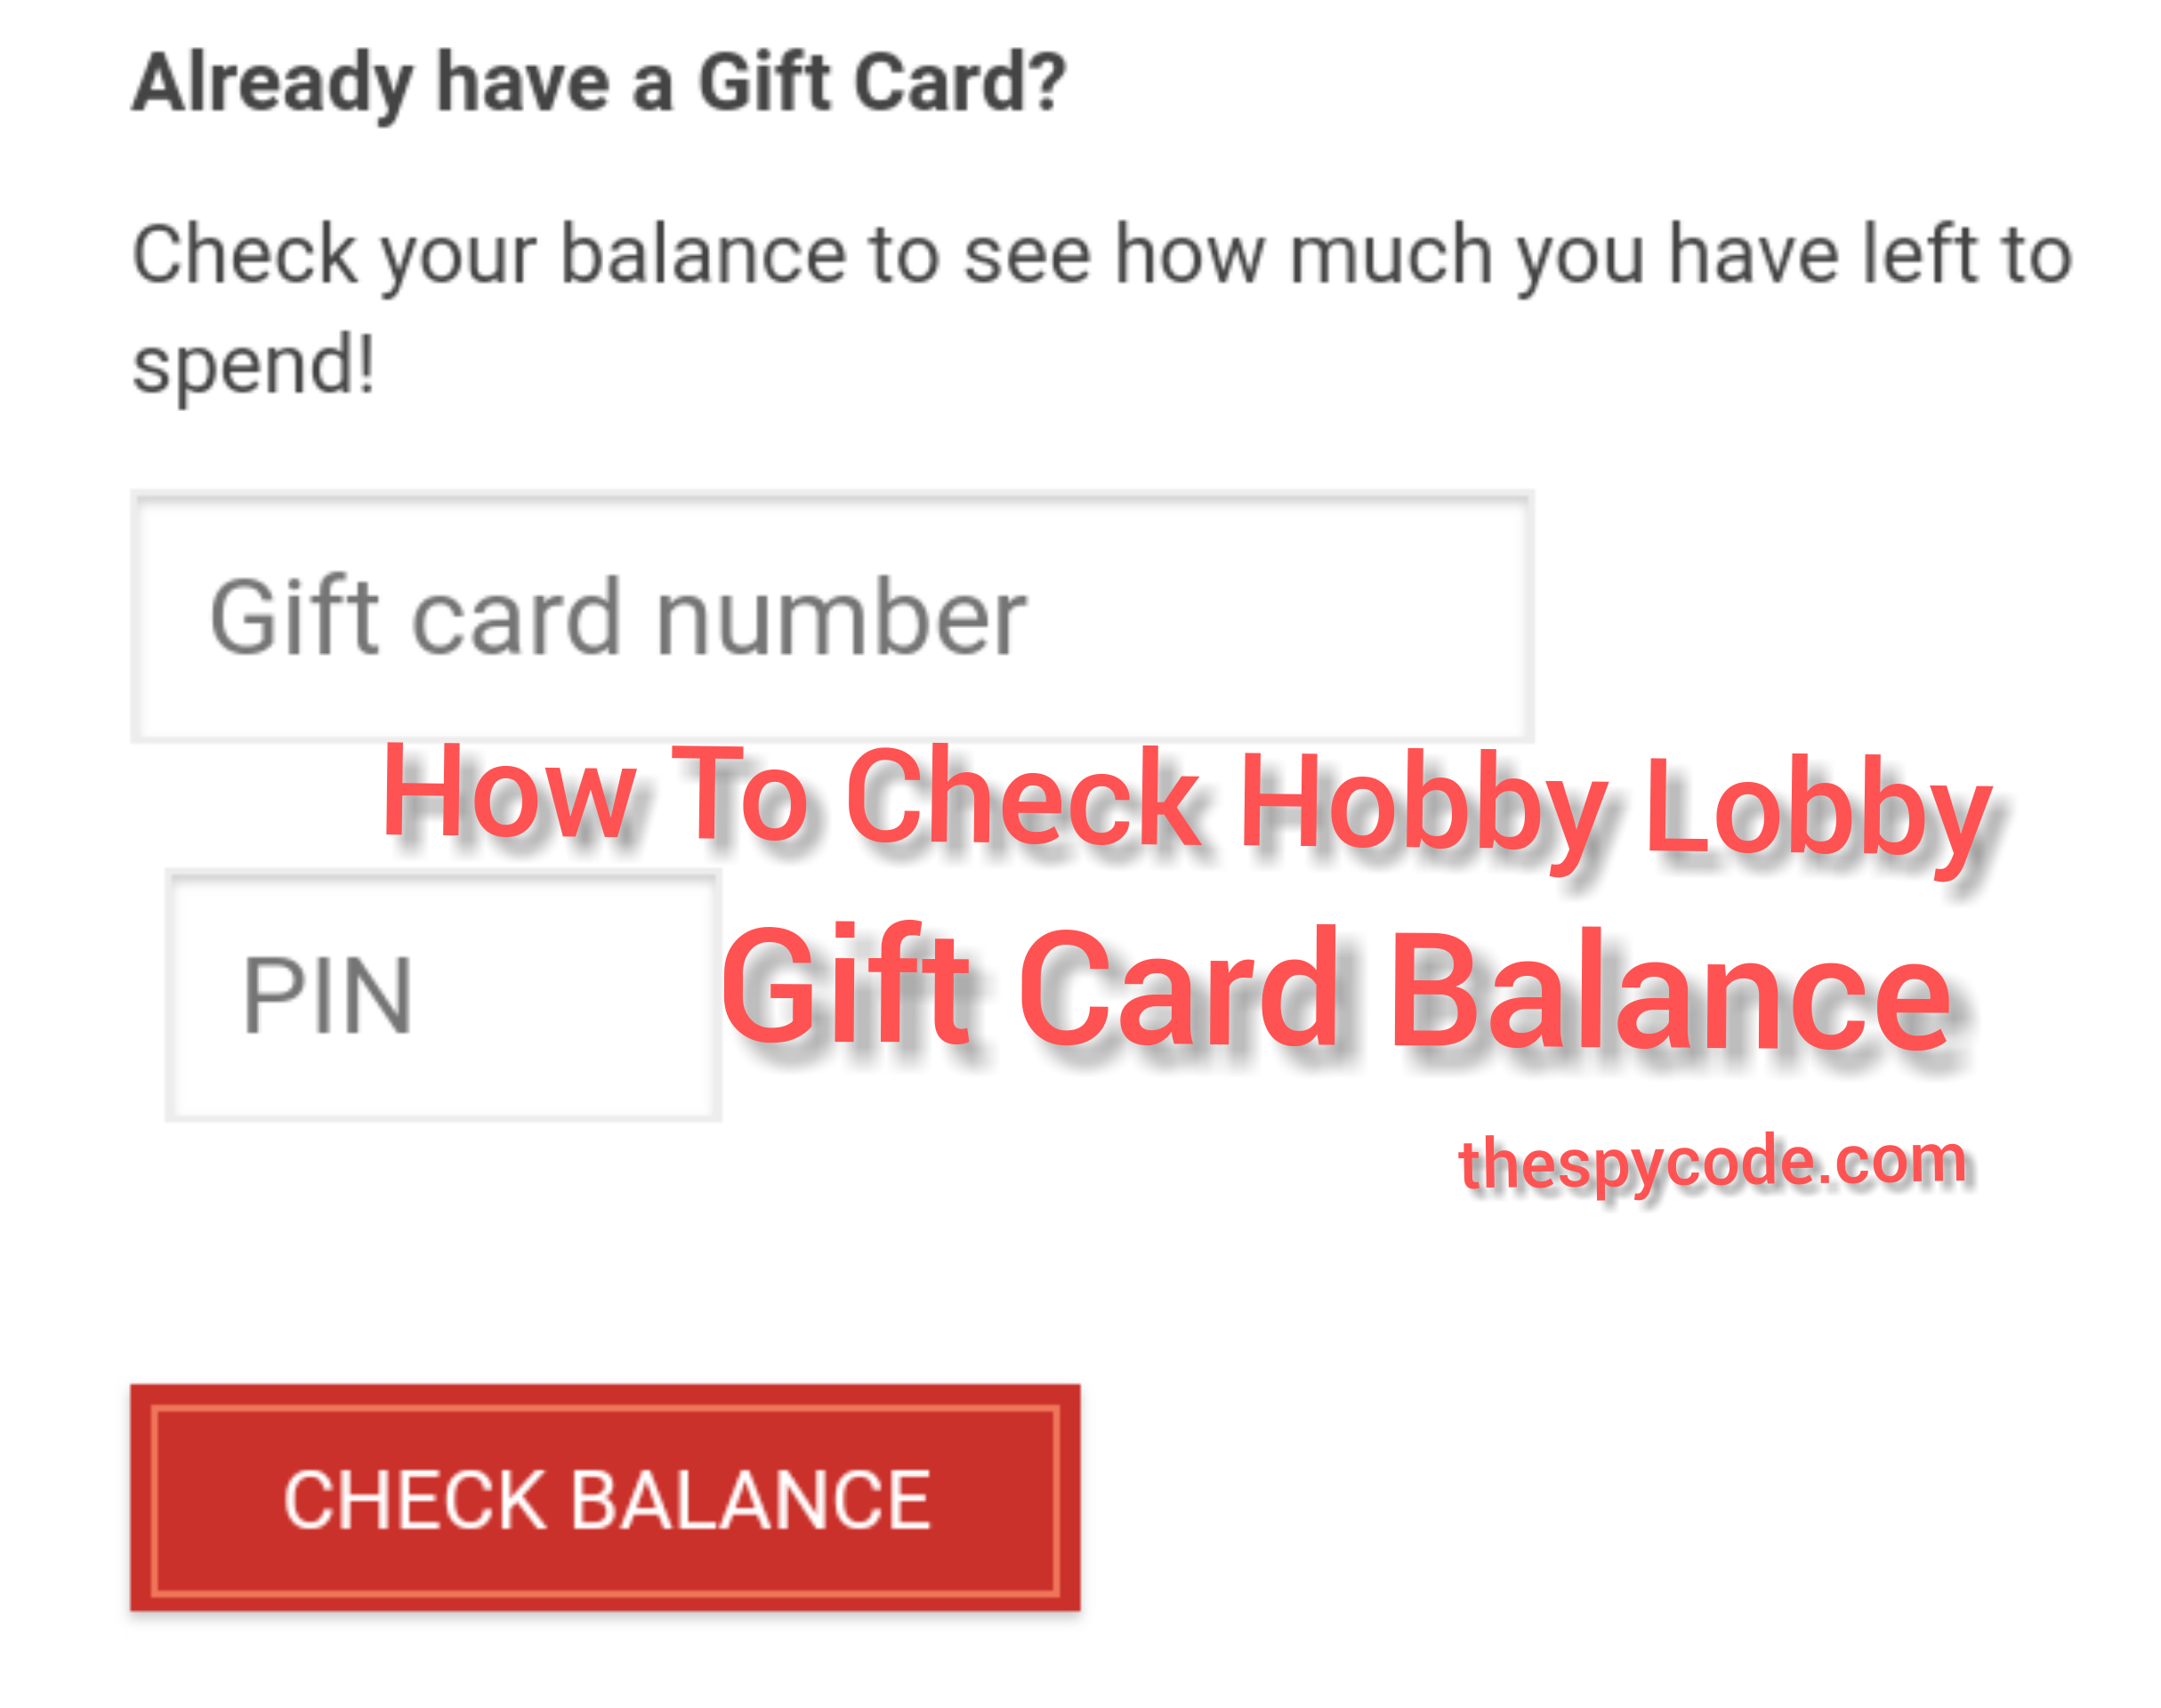 Hobby Lobby Gift Card Balance Check - How To Check A Hobby Lobby Gift Card Balance